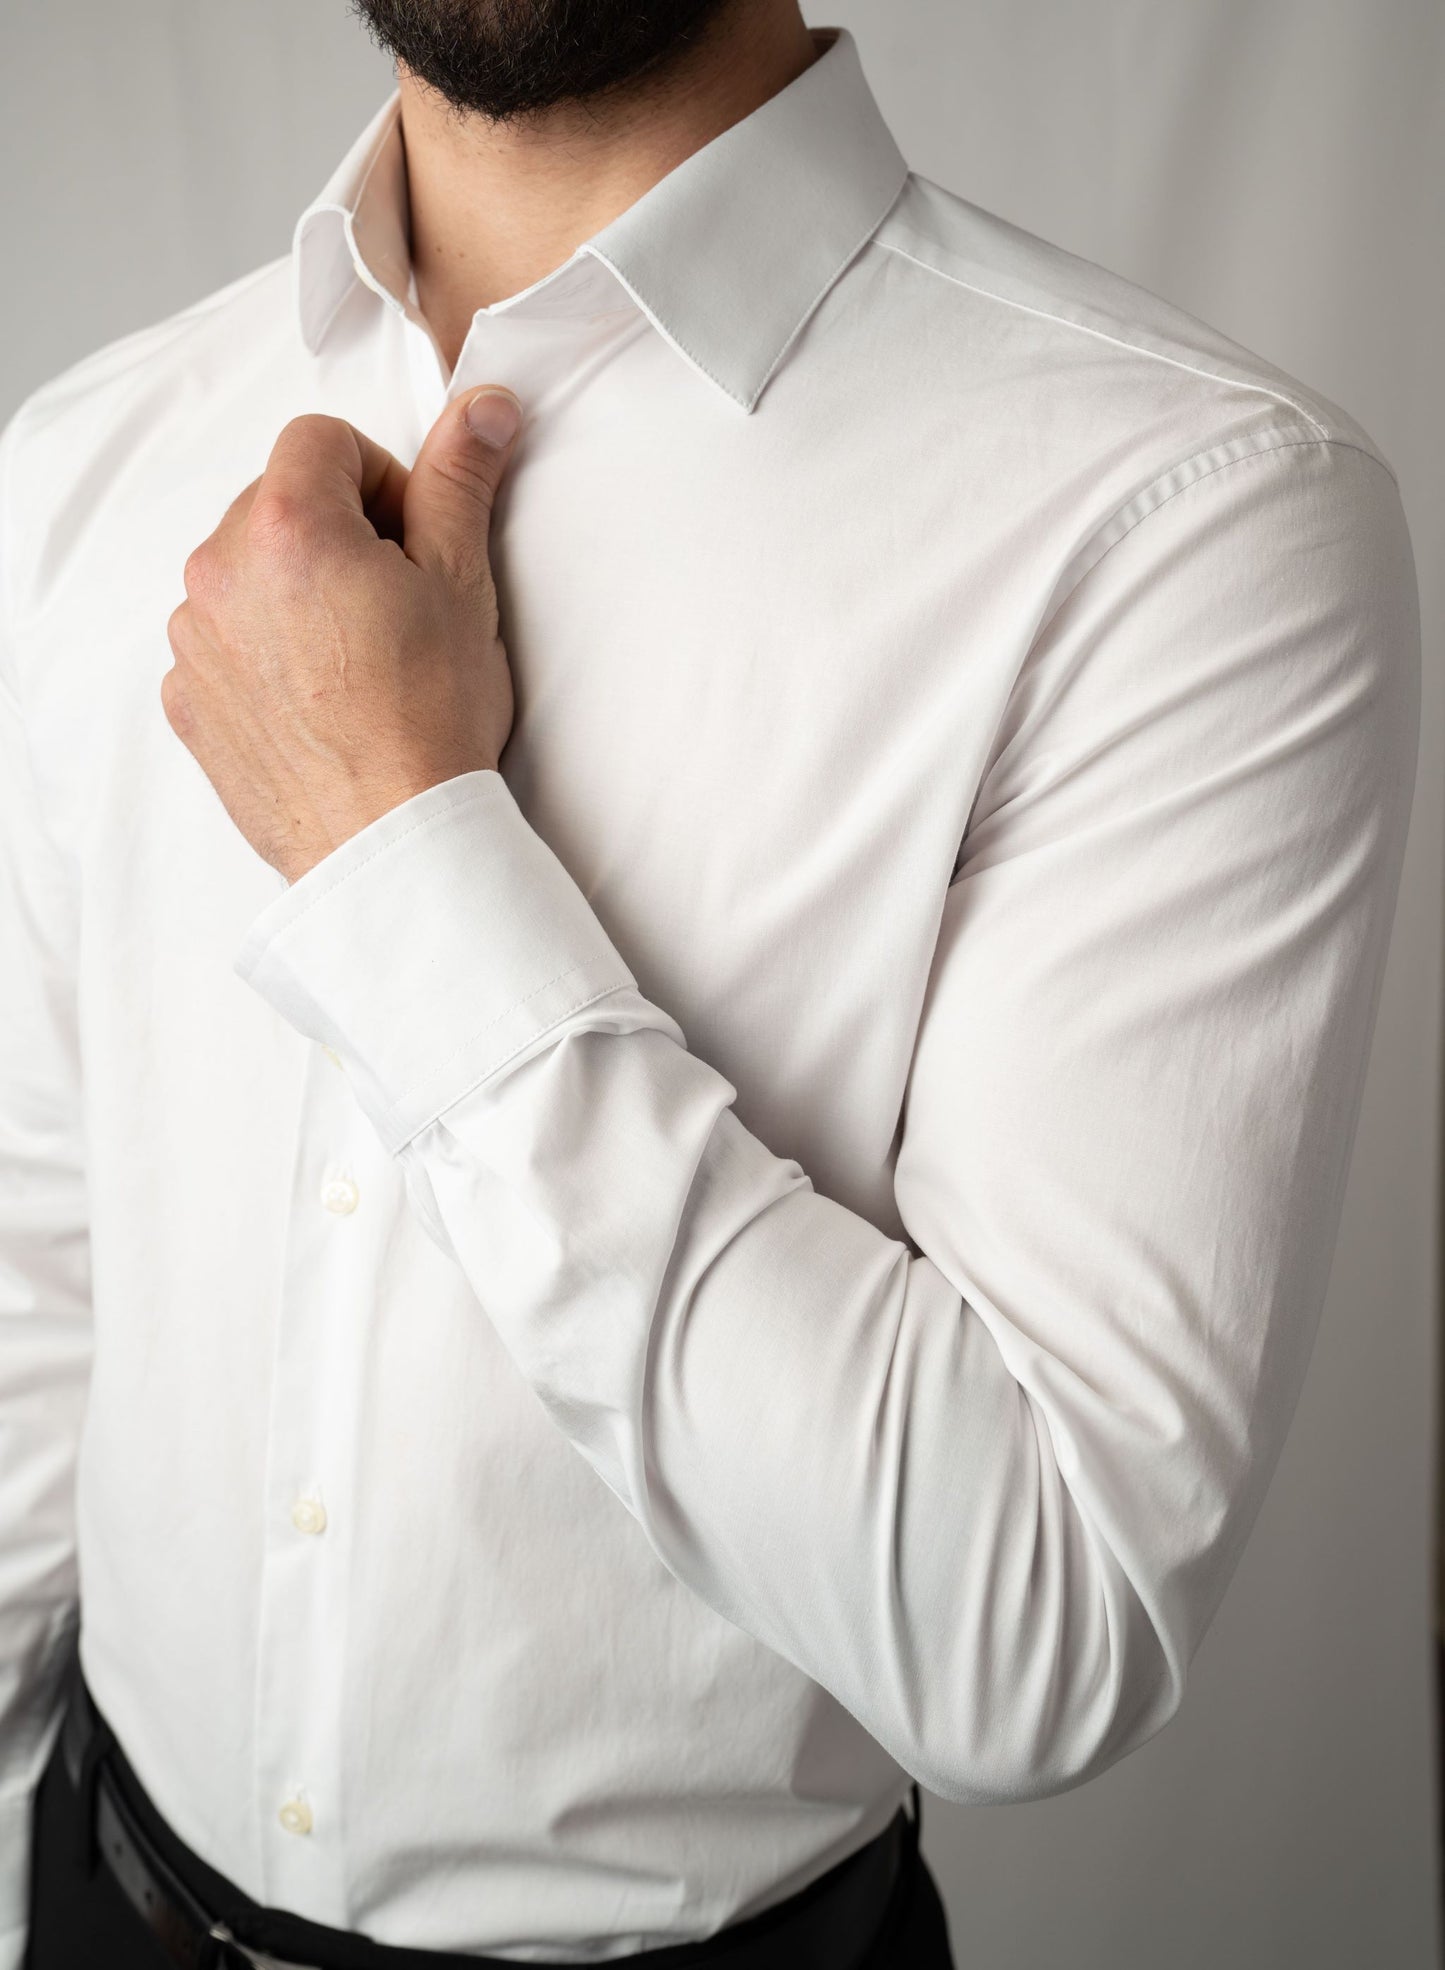 Tie Set, White Solid #cc68, Eazy Care Cotton Blend Men's Monogrammed Custom Dress Shirt.